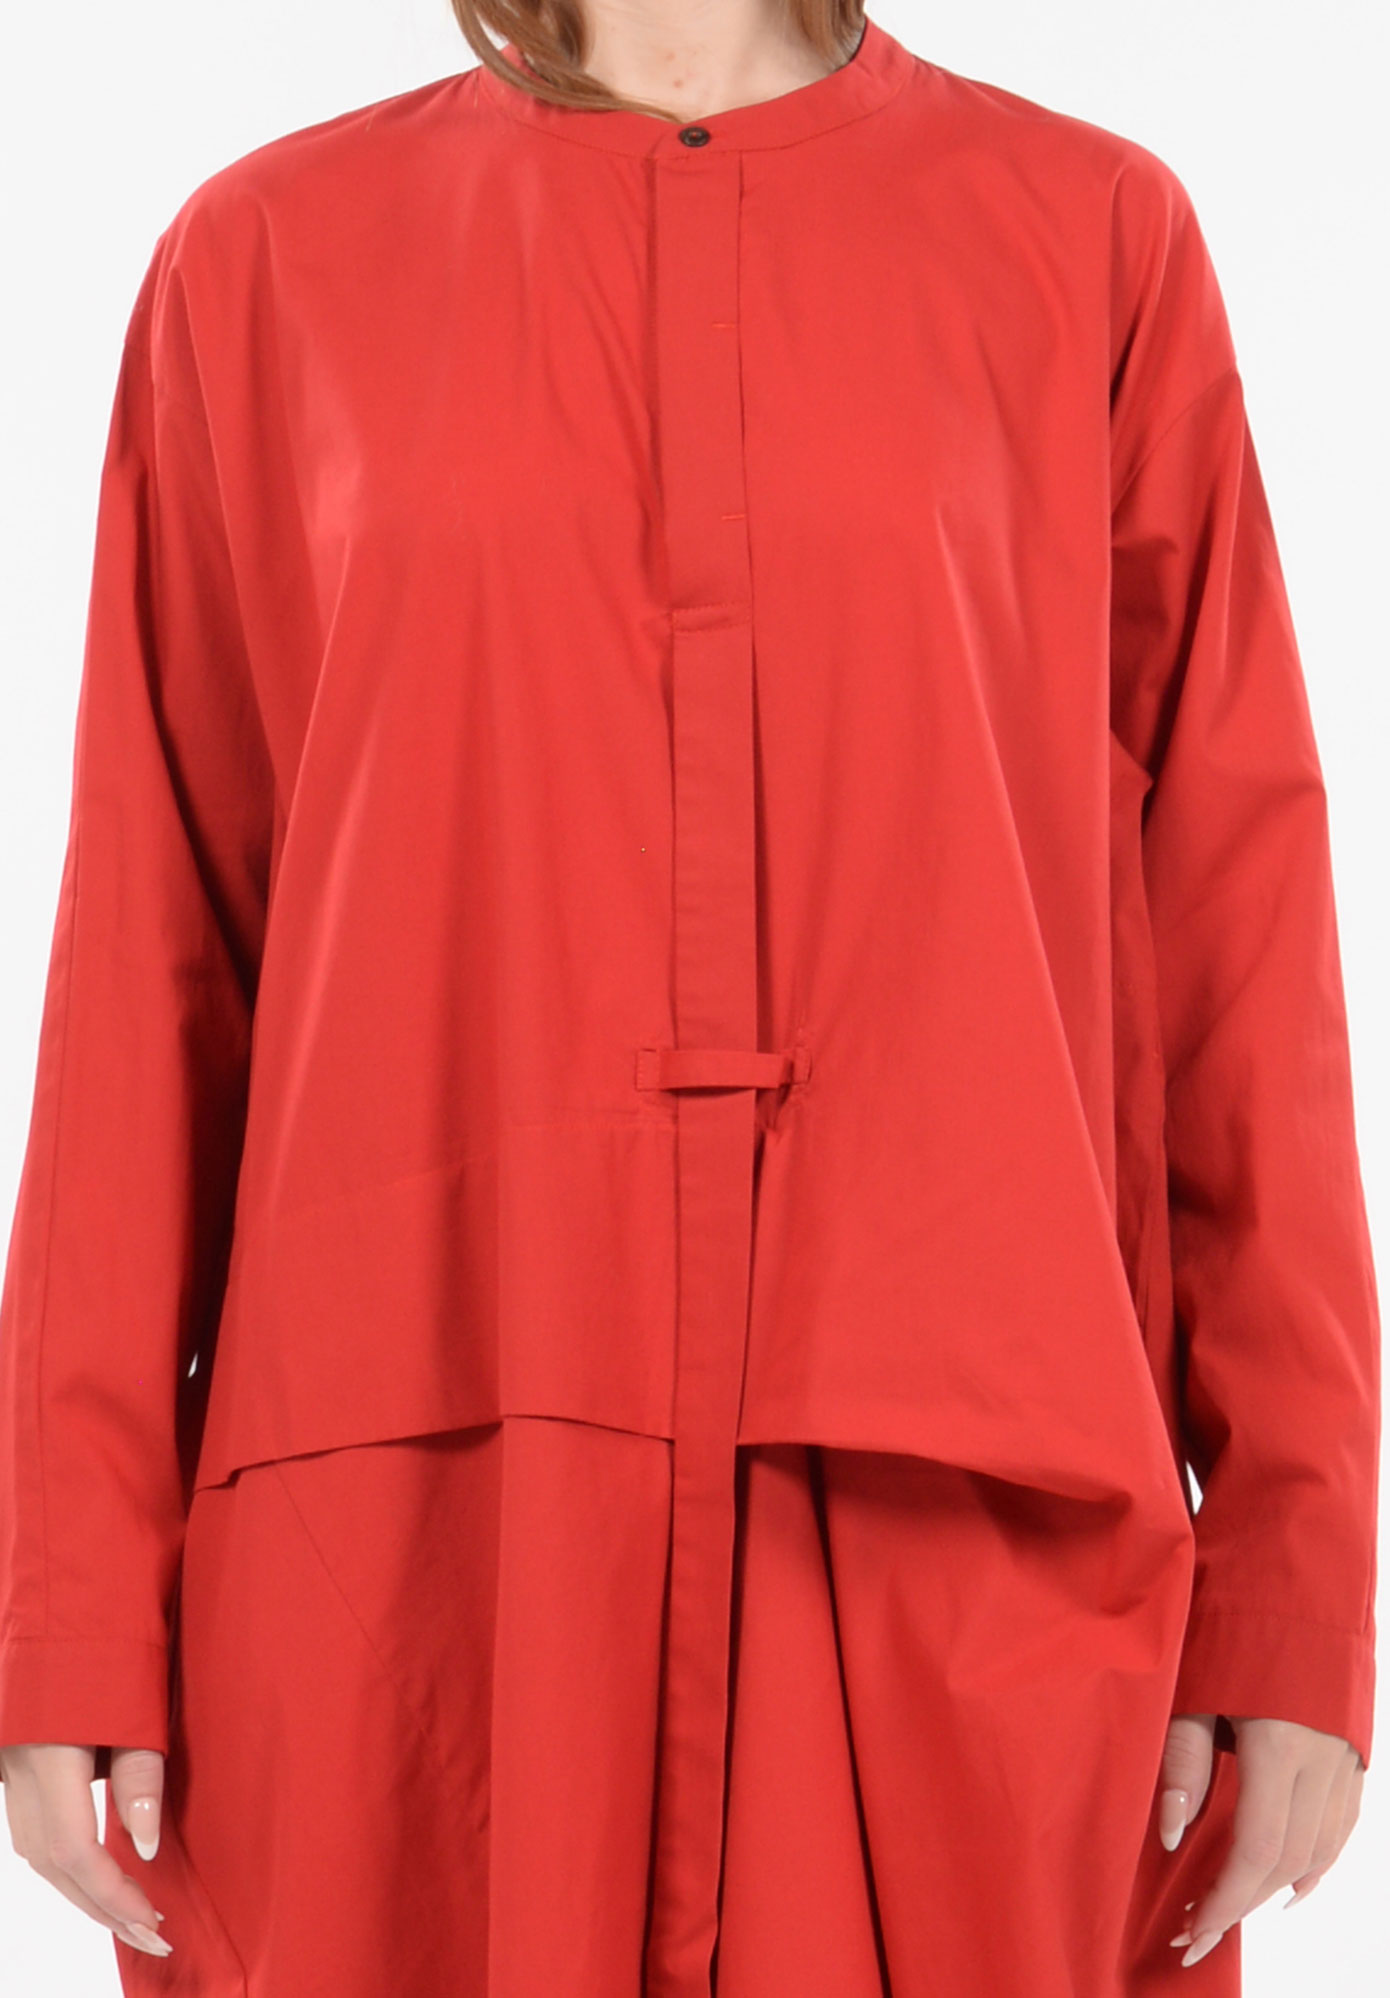 MOYURU - OVERSIZED COTTON DRESS - RED